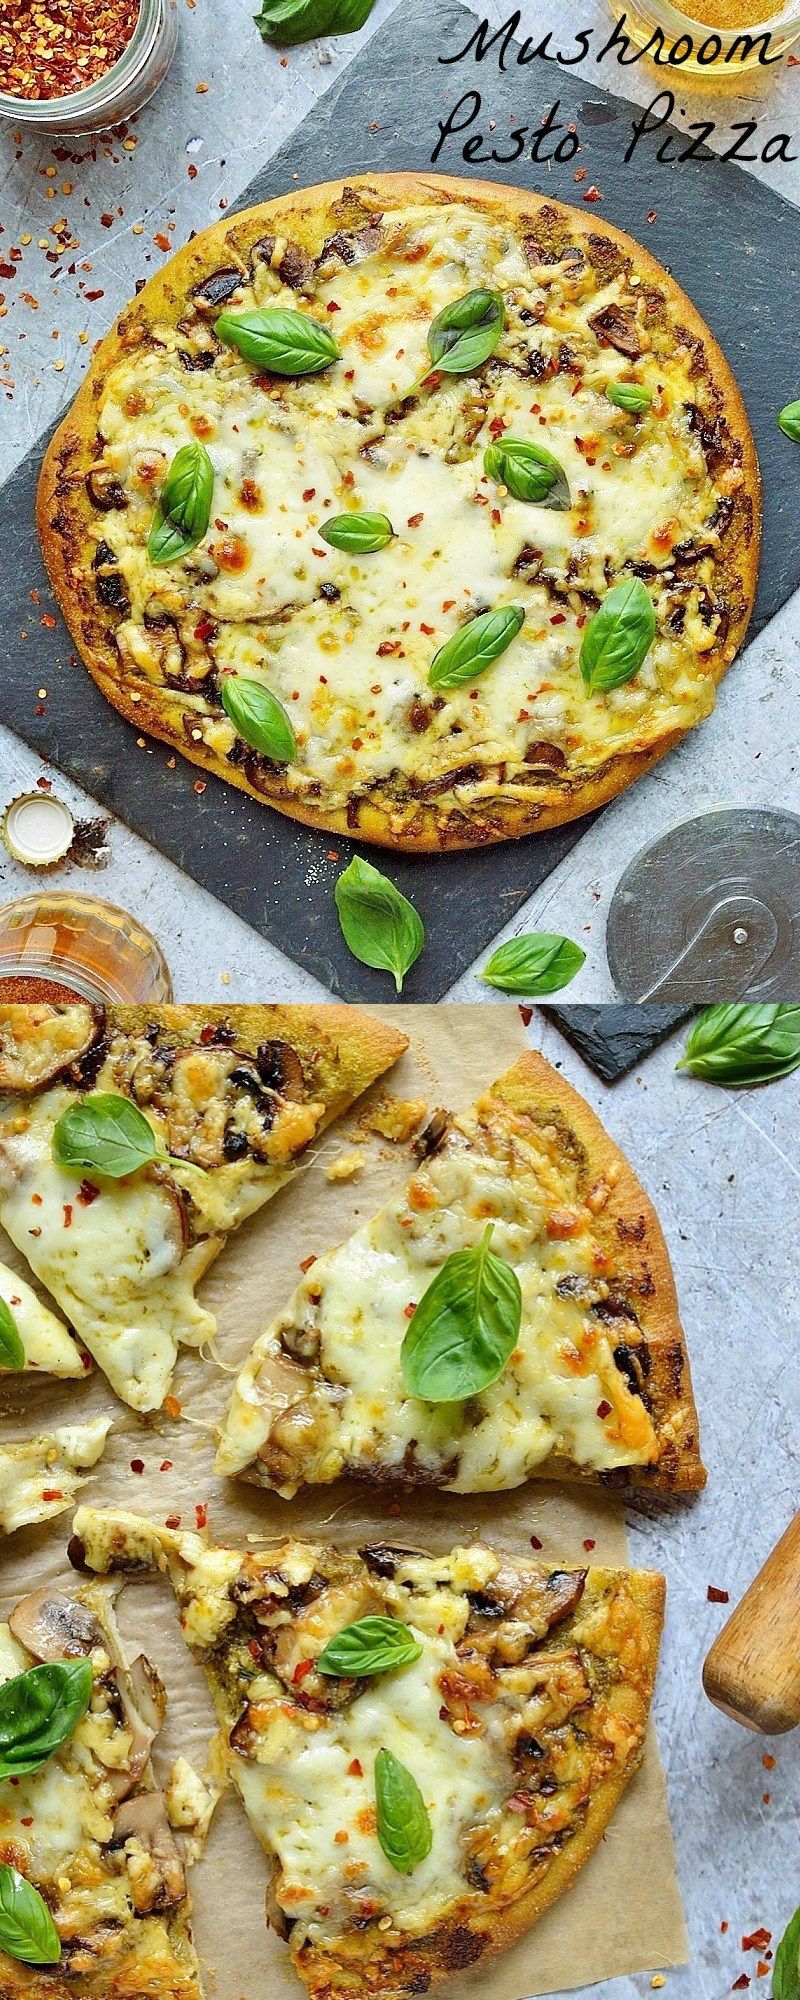 Mushroom pesto pizza - easy home made vegetarian pizza topped with garlic mushrooms, basil pesto and plenty of mozzarella and cheddar cheese. -   22 home made pizza recipes
 ideas